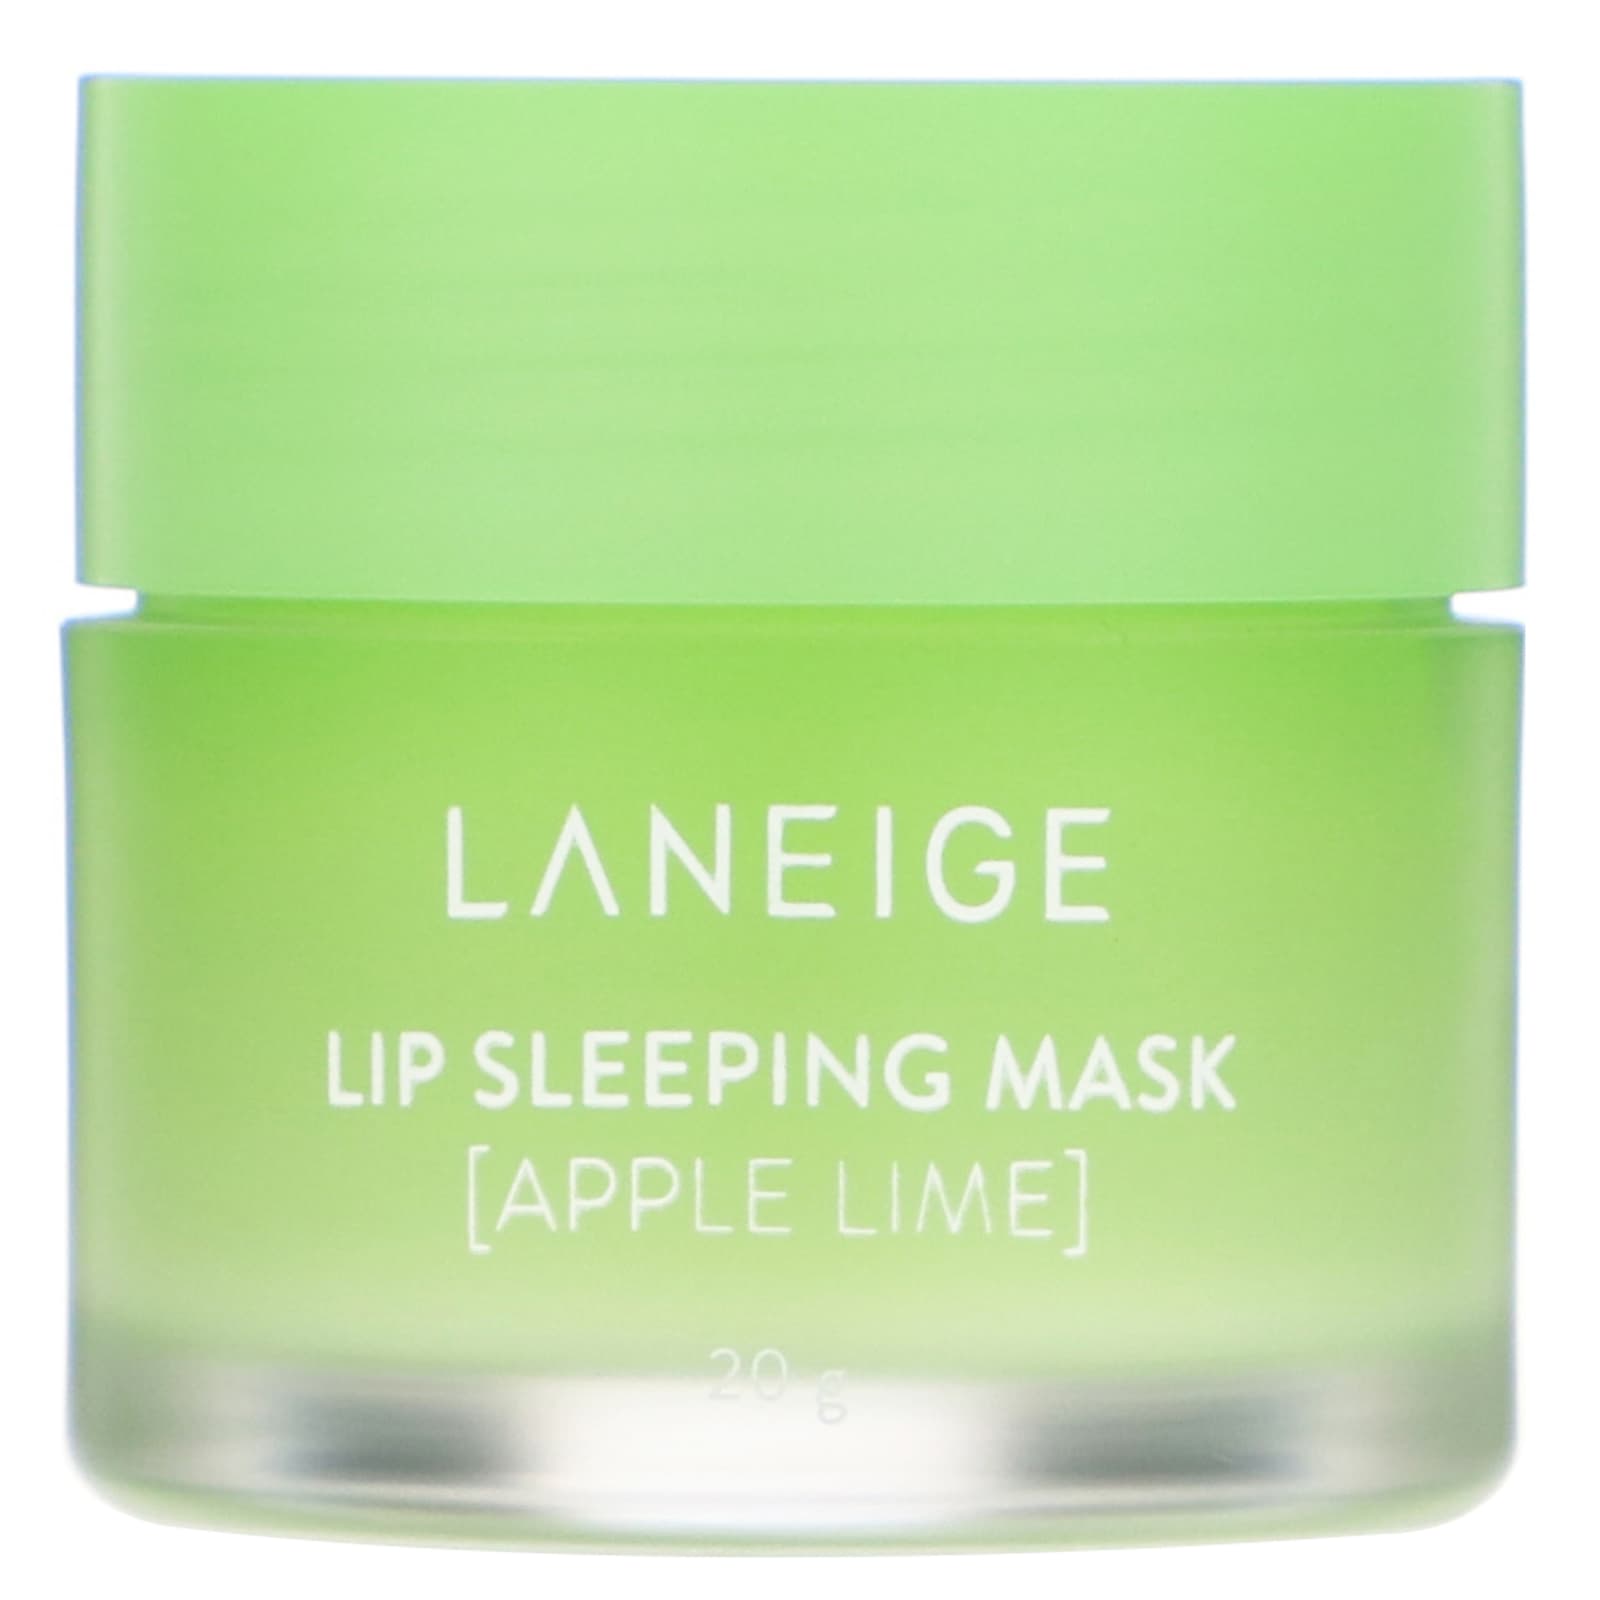 Laneige, Lip Sleeping Mask, 20 g